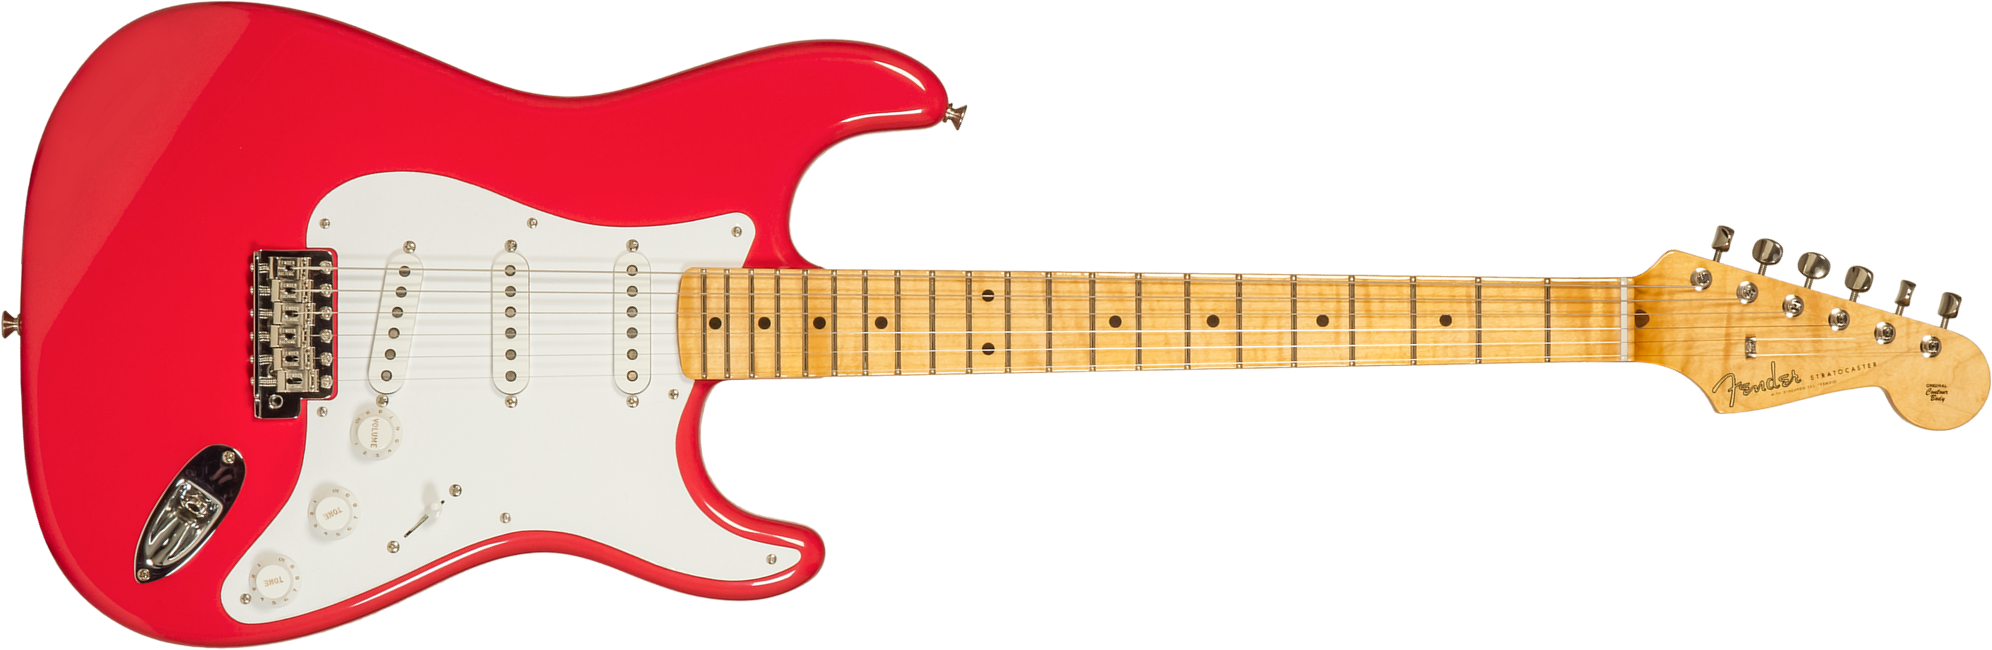 Fender Custom Shop Strat 1956 3s Trem Mn #r133022 - Nos Fiesta Red - E-Gitarre in Str-Form - Main picture